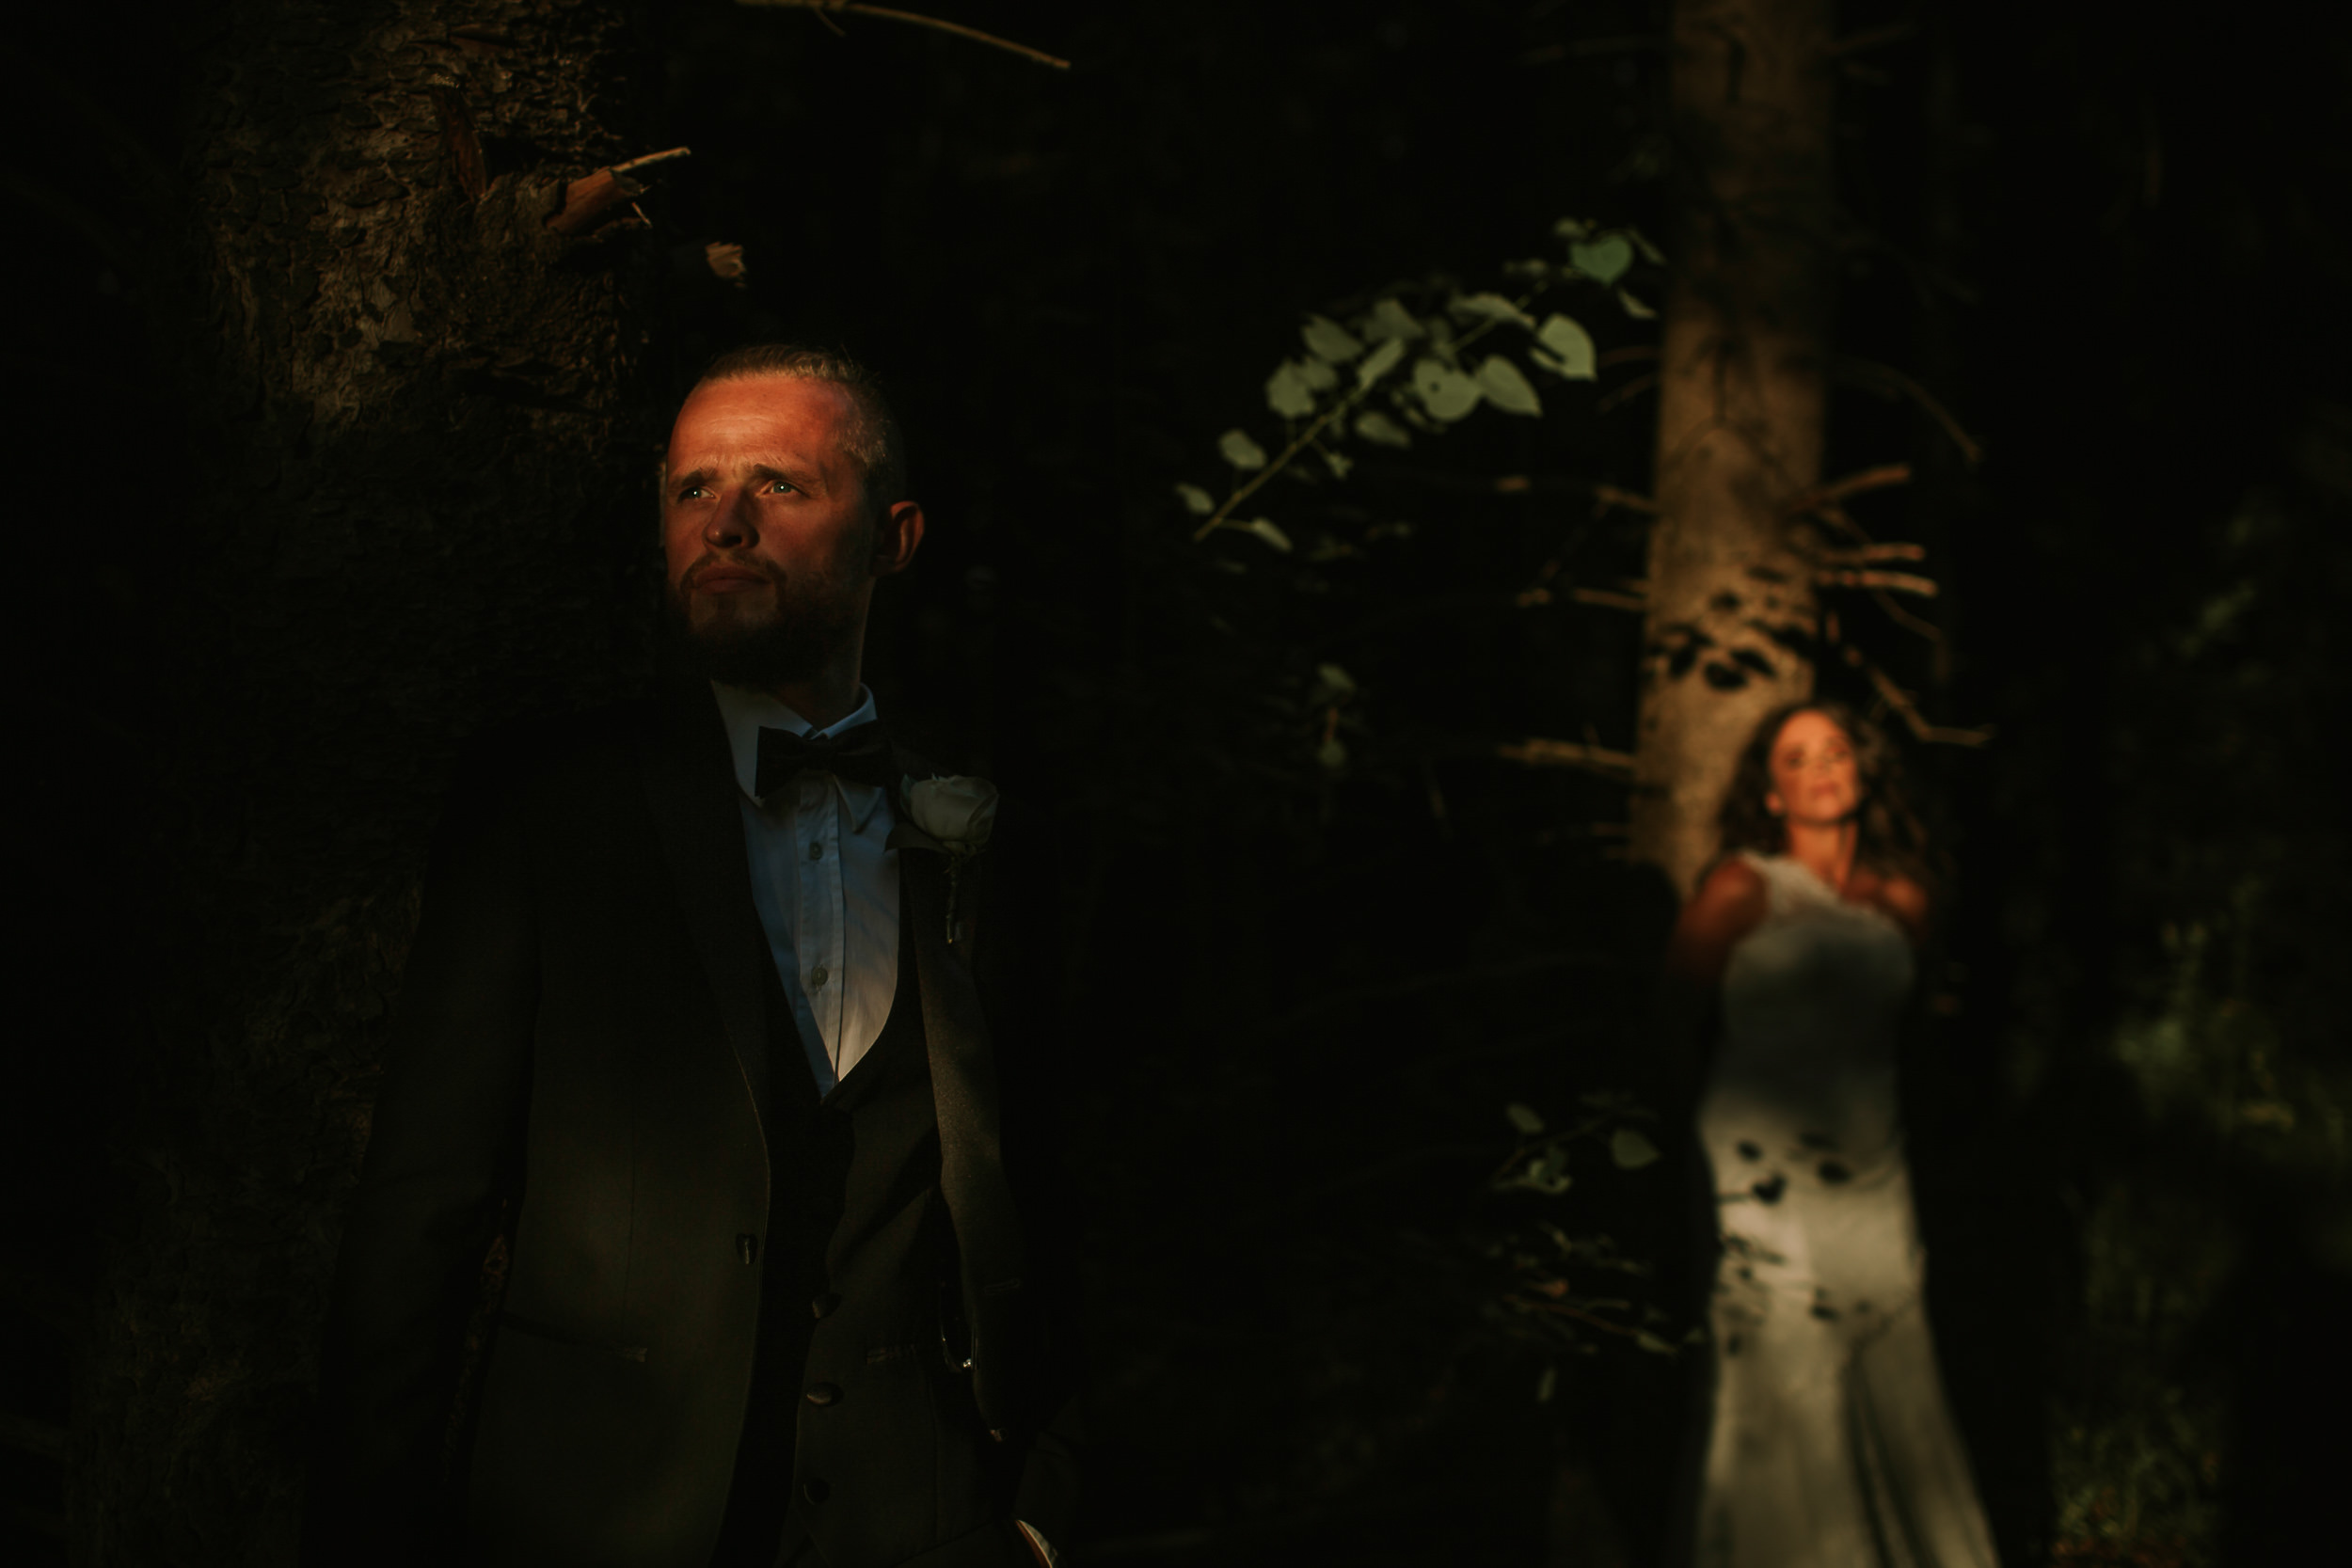 shadowy wedding images - wedding in Toronto - wedding portraits